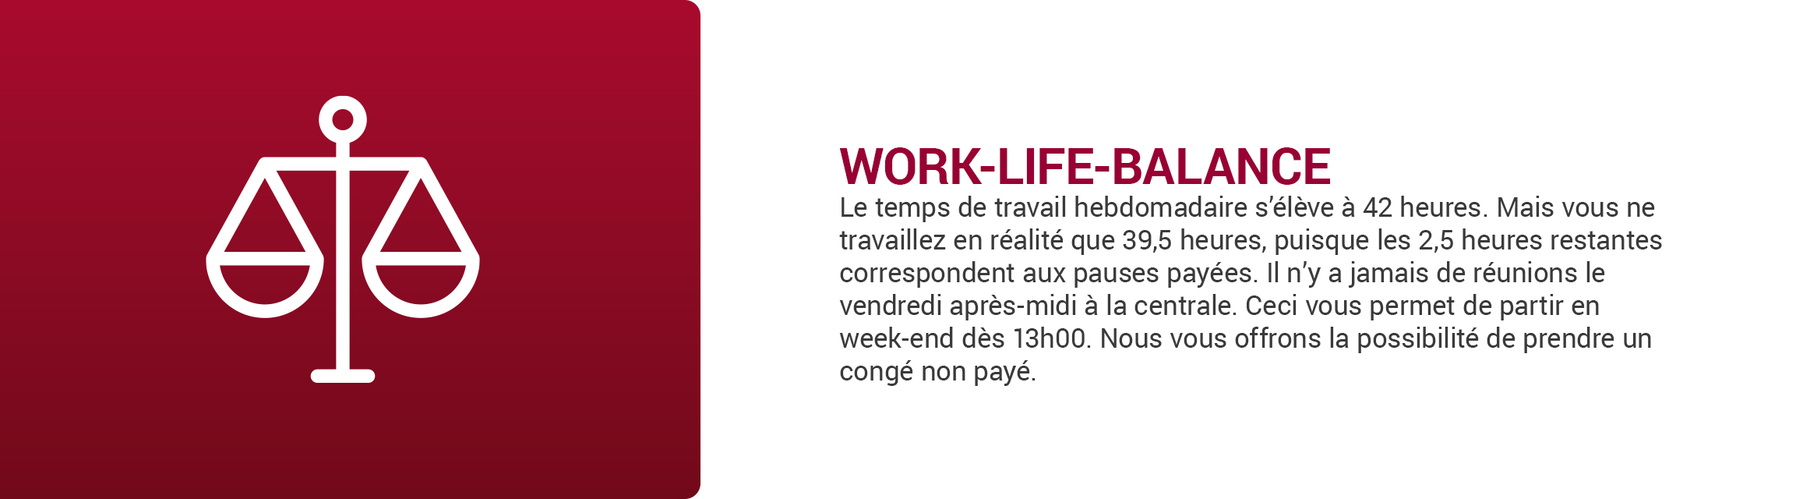 O_23-37_Jobs-worklife_nwide_fr_02.jpg